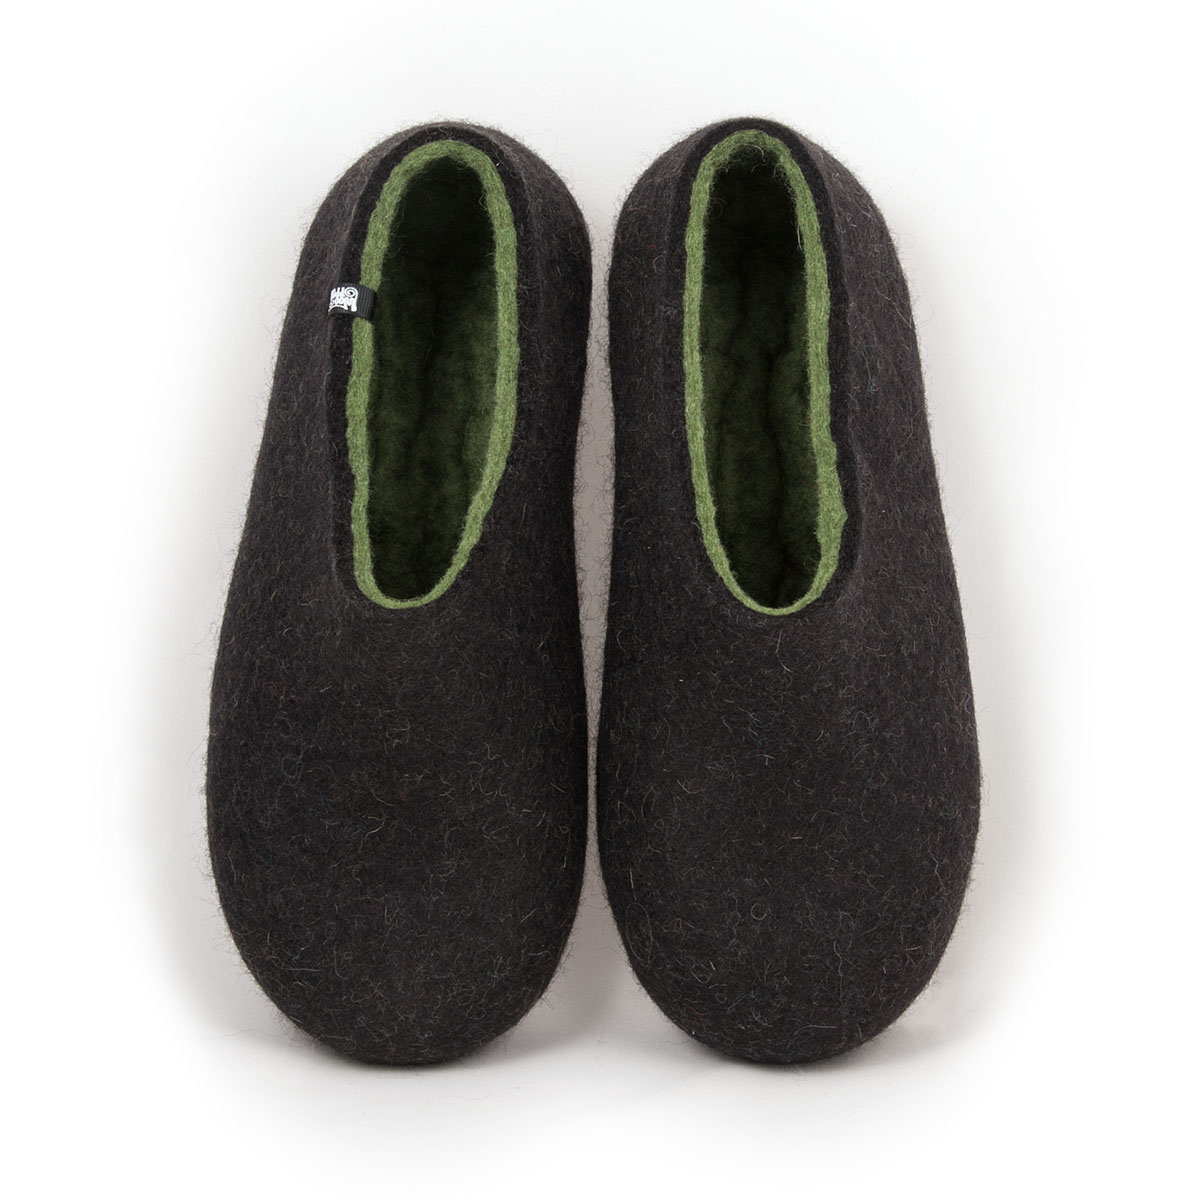 Black mens slippers DUAL BLACK olive green